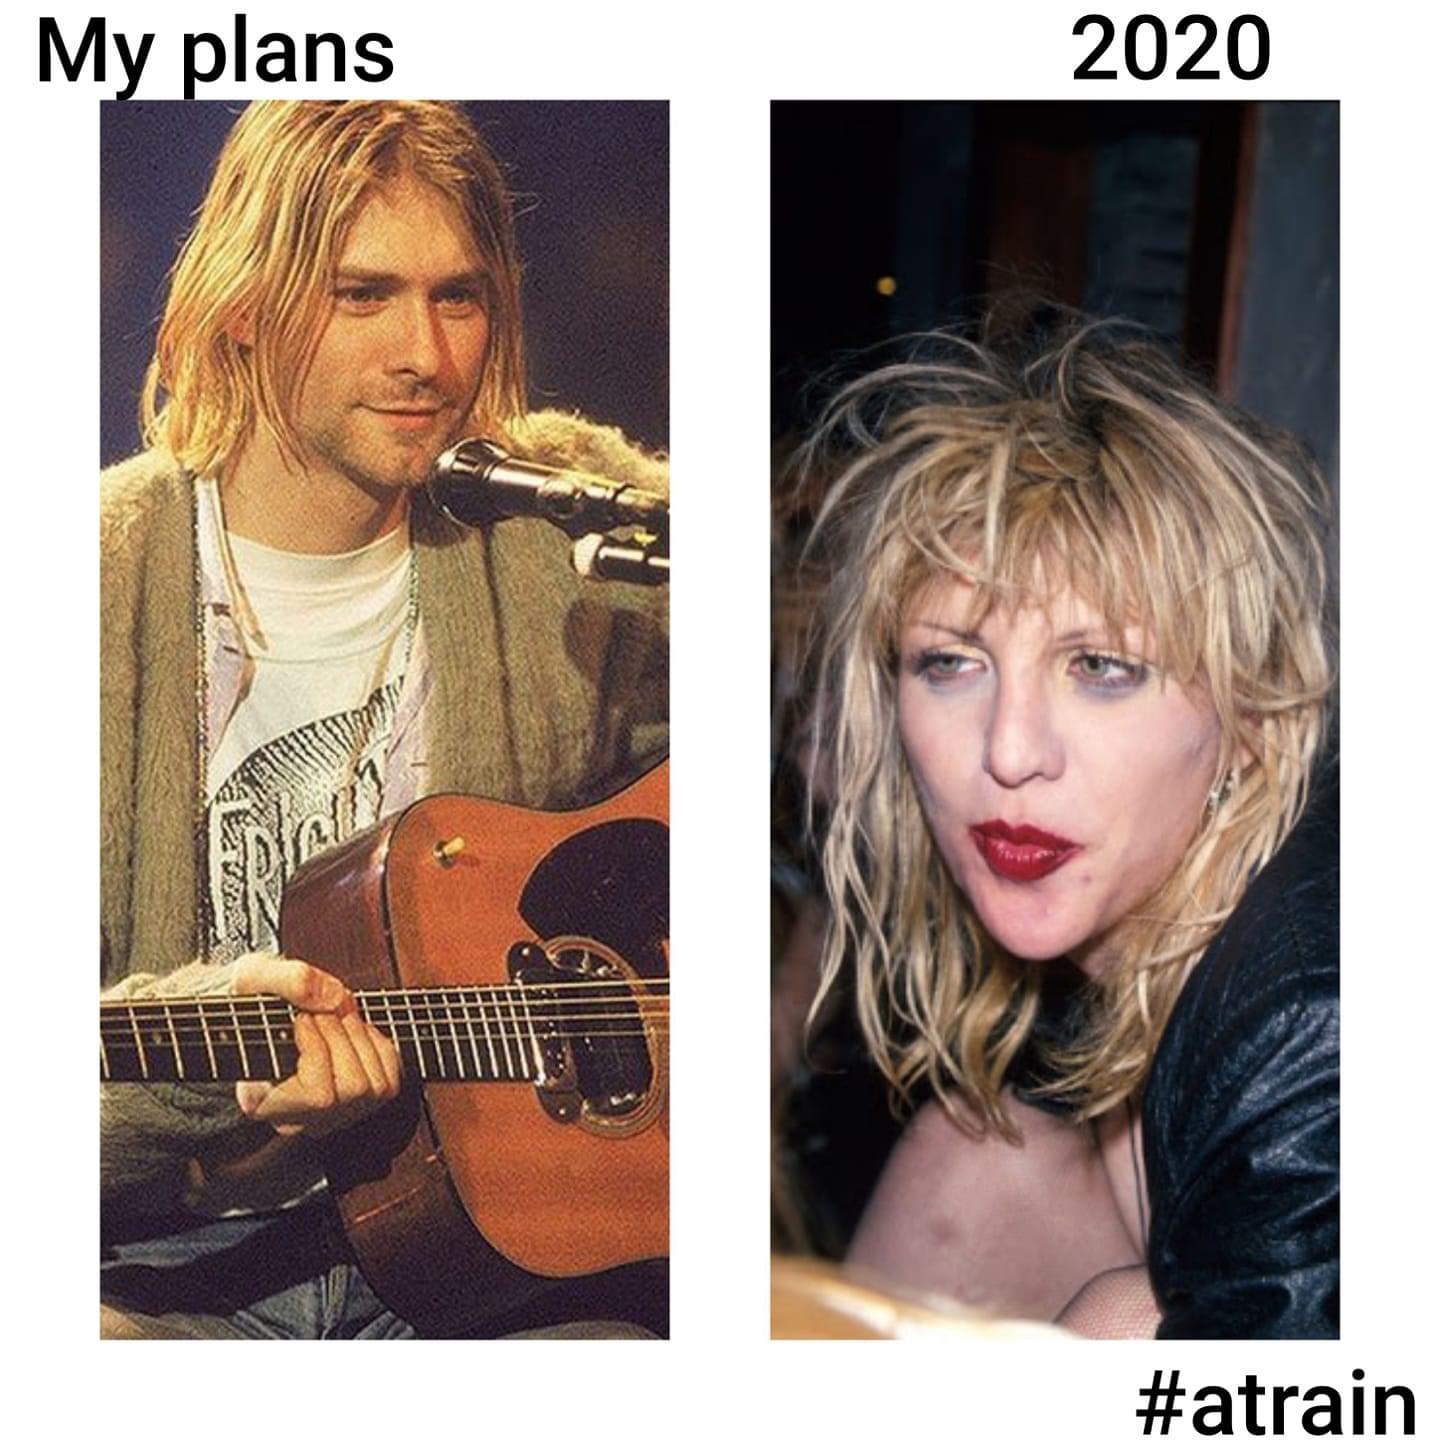 kurt cobain cigarette brand - My plans 2020